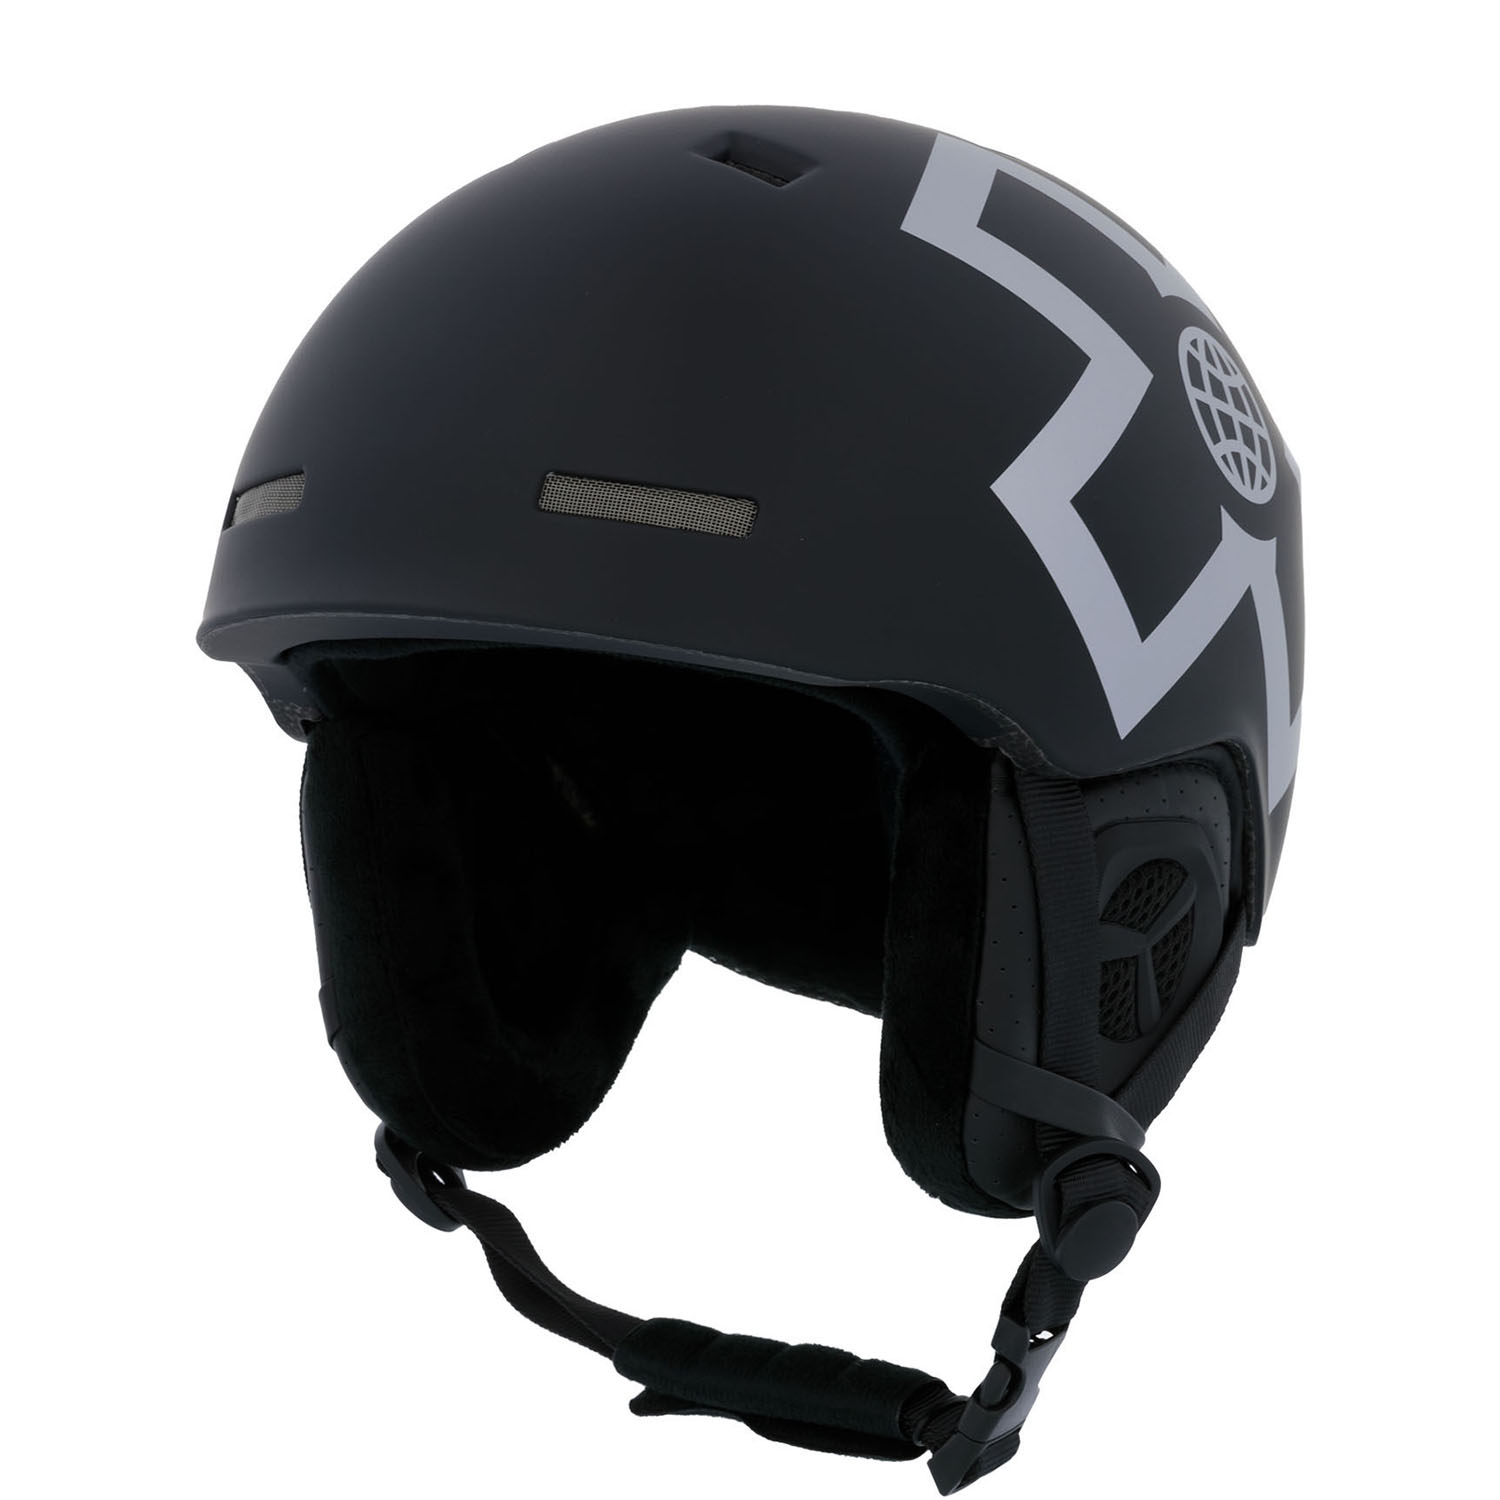 Prosurf X games black grey casco de snowboard